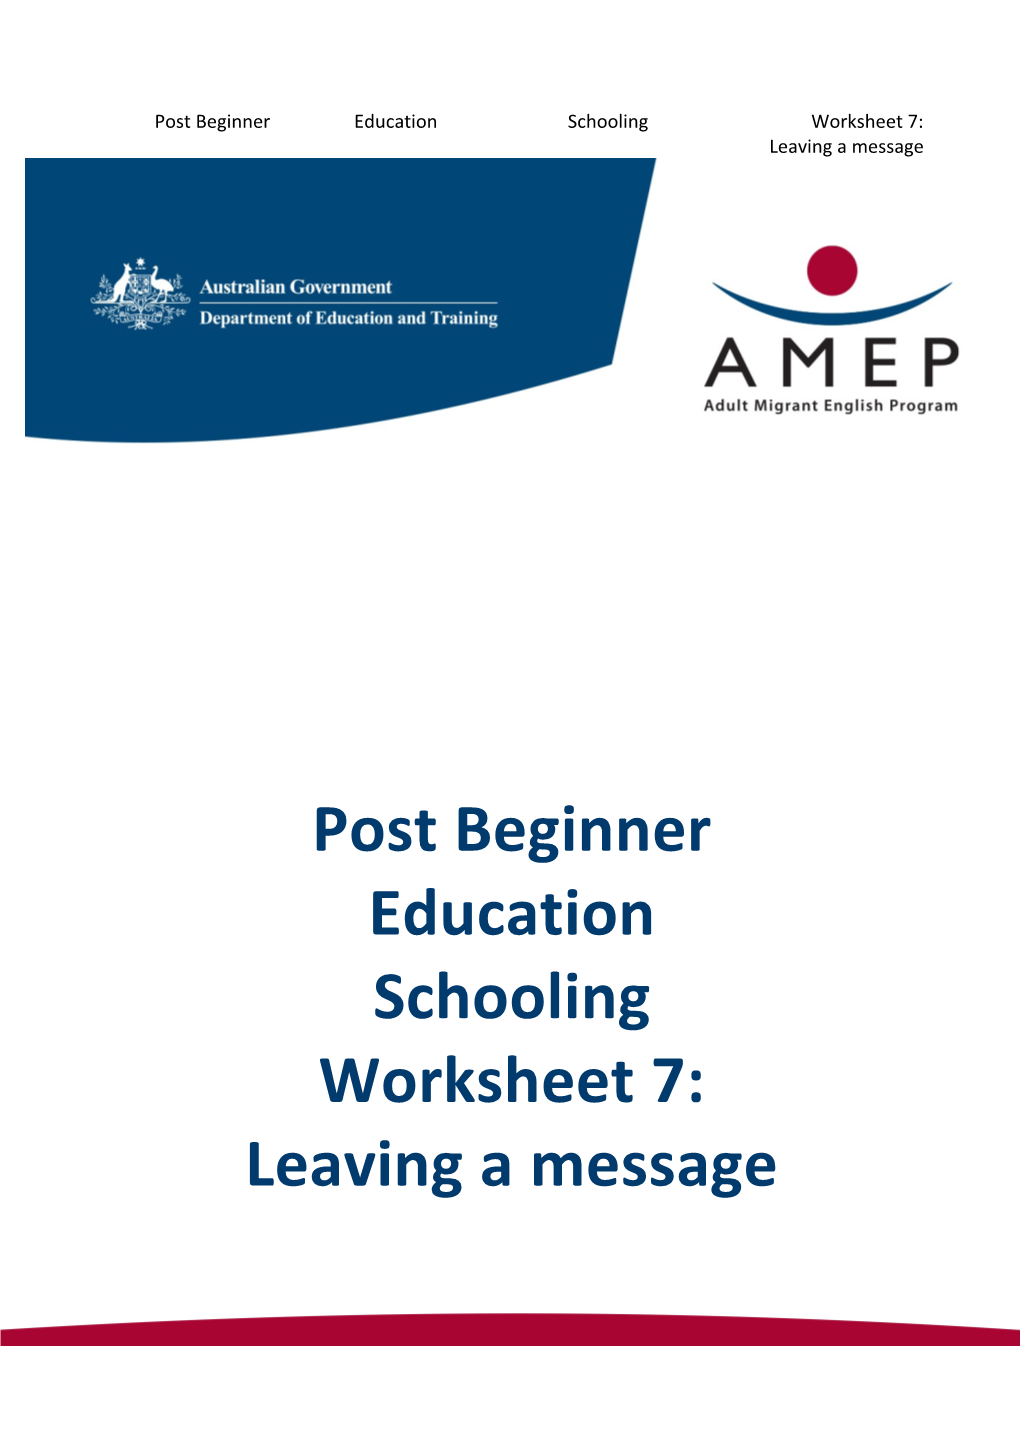 Post Beginner Education Schooling Worksheet 7: Leaving a Message